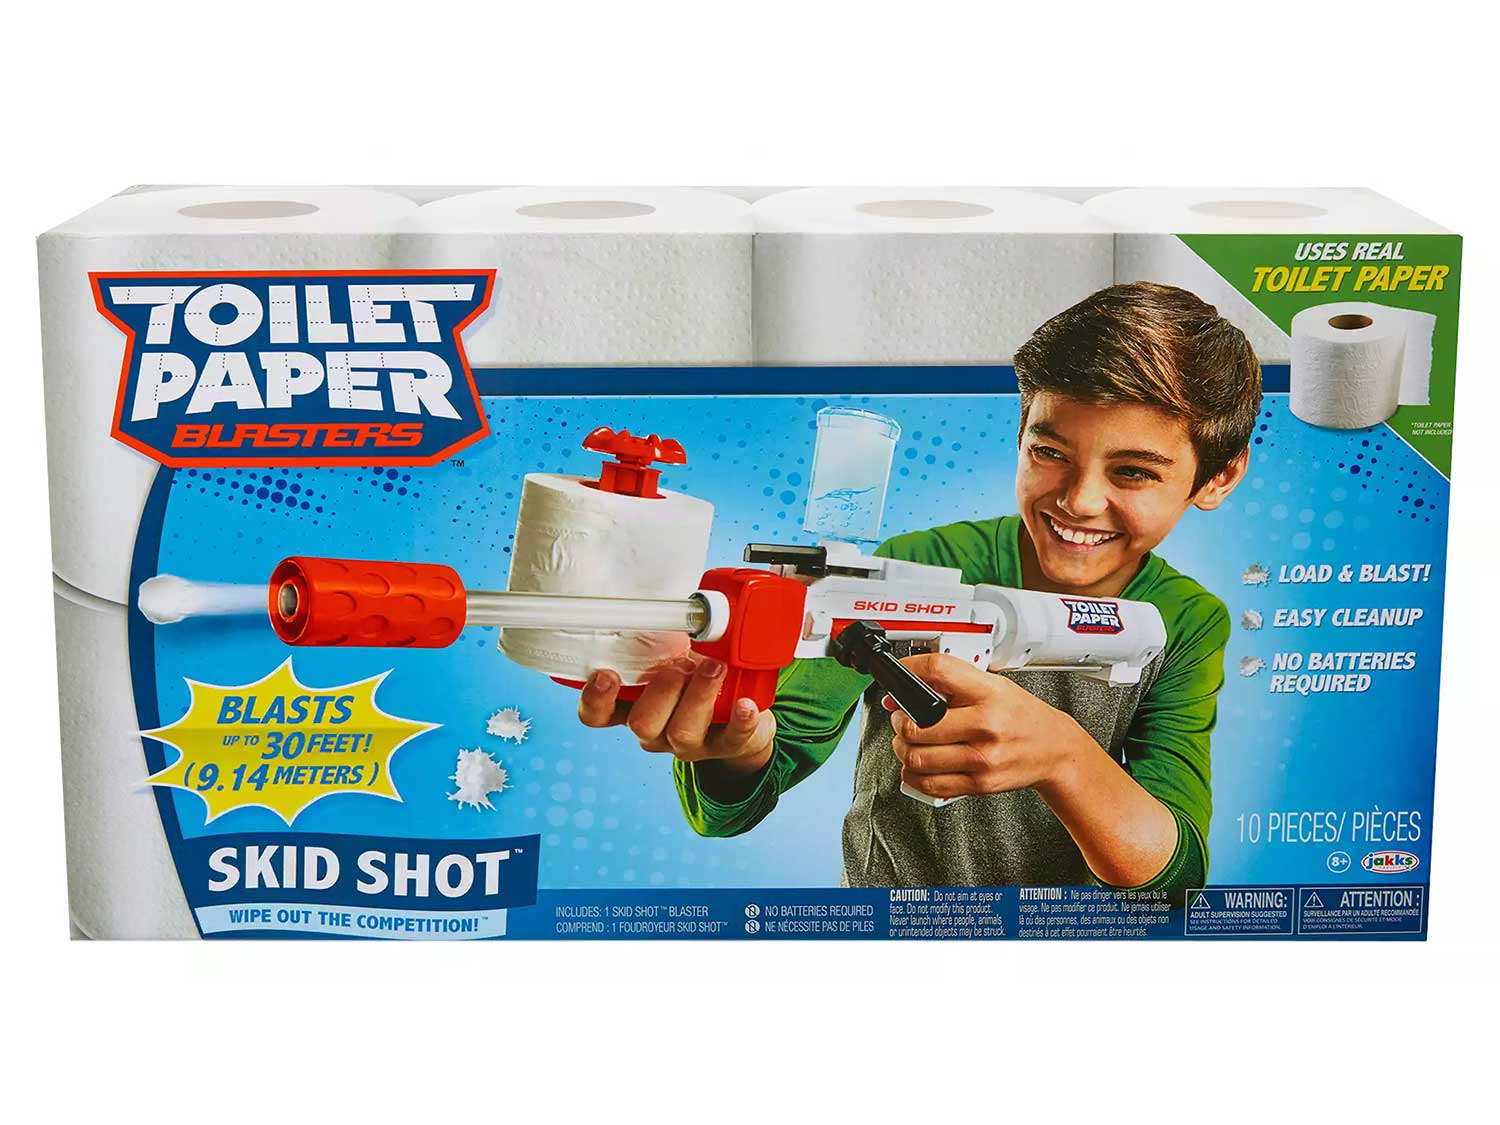 Toilet Paper blasters Skid Shot Spitball Guns